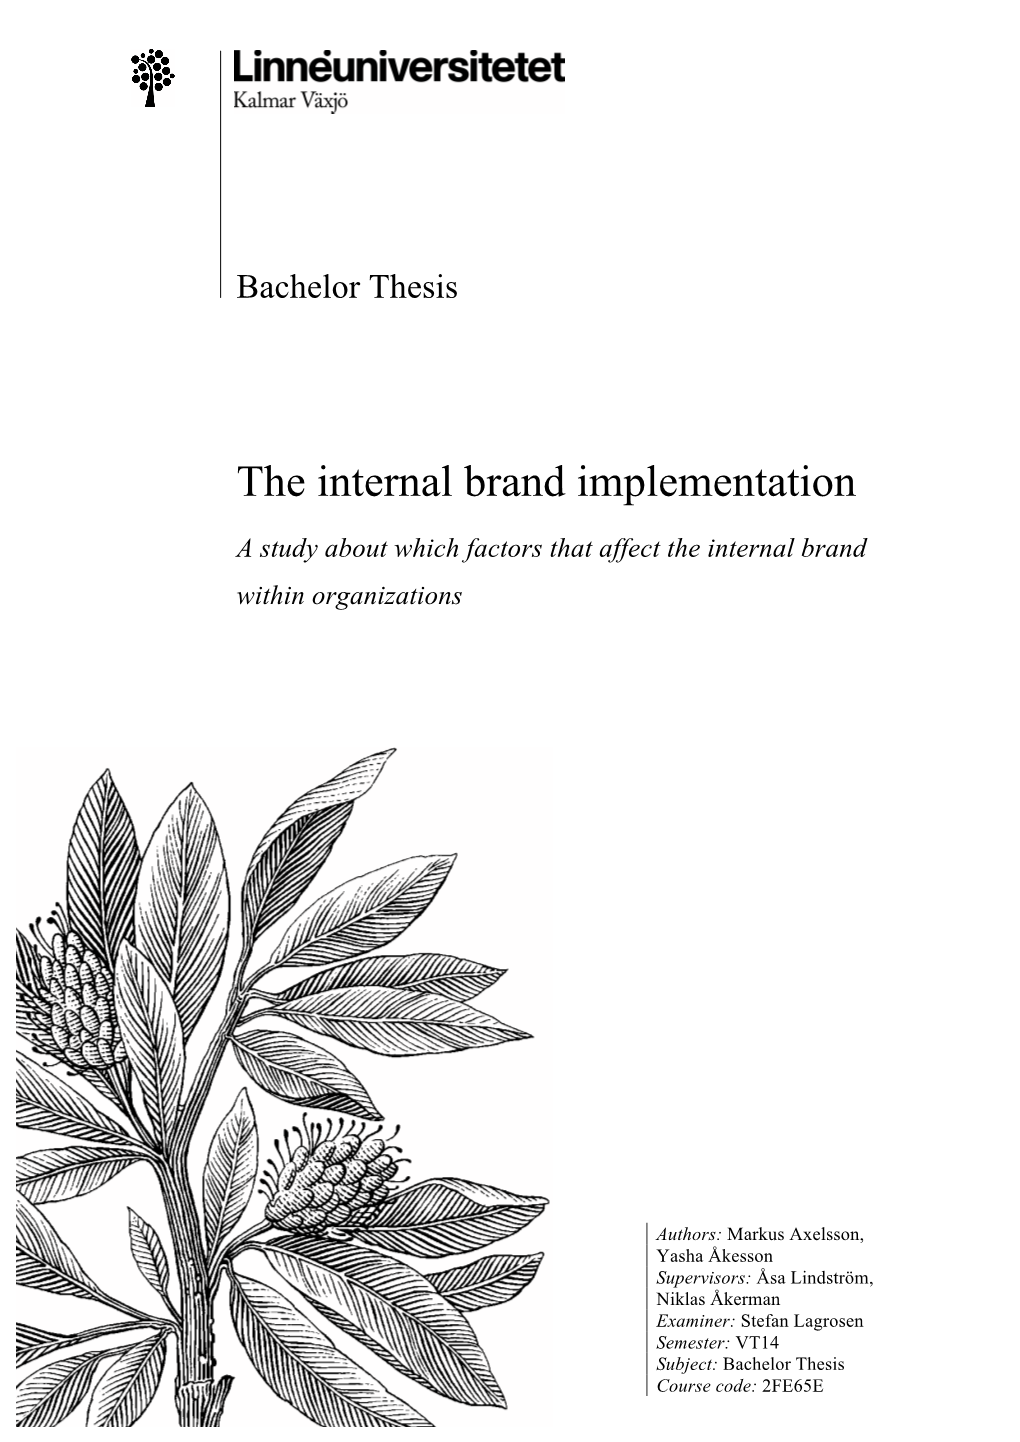 The Internal Brand Implementation